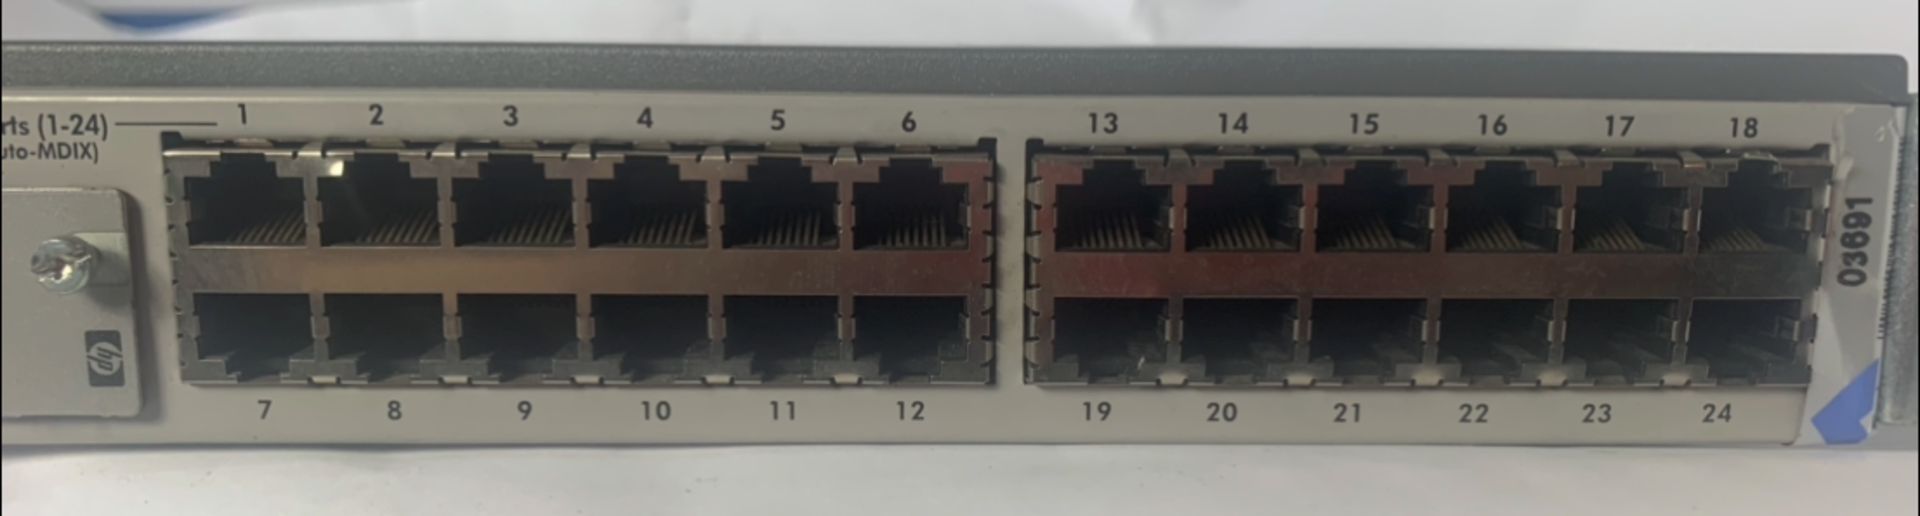 HP J4818A Pro 24 Port Switch - Image 4 of 5